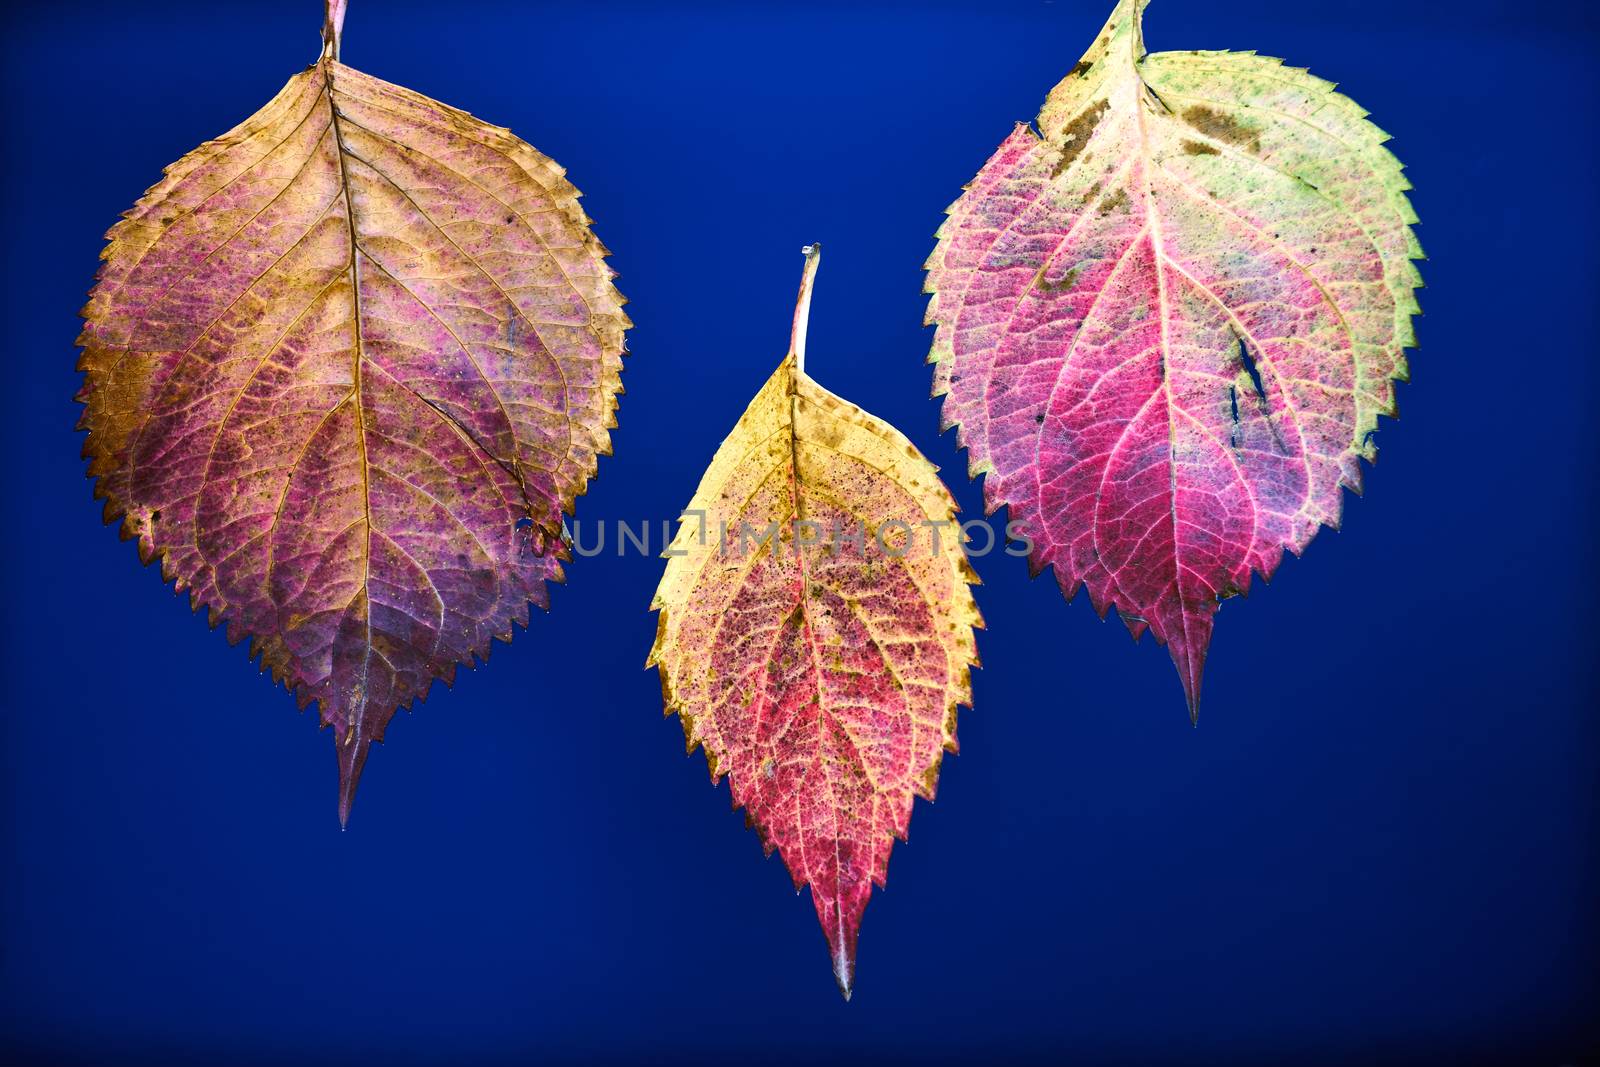 colorful leaves of a hydrangea bush during fall season by gkordus